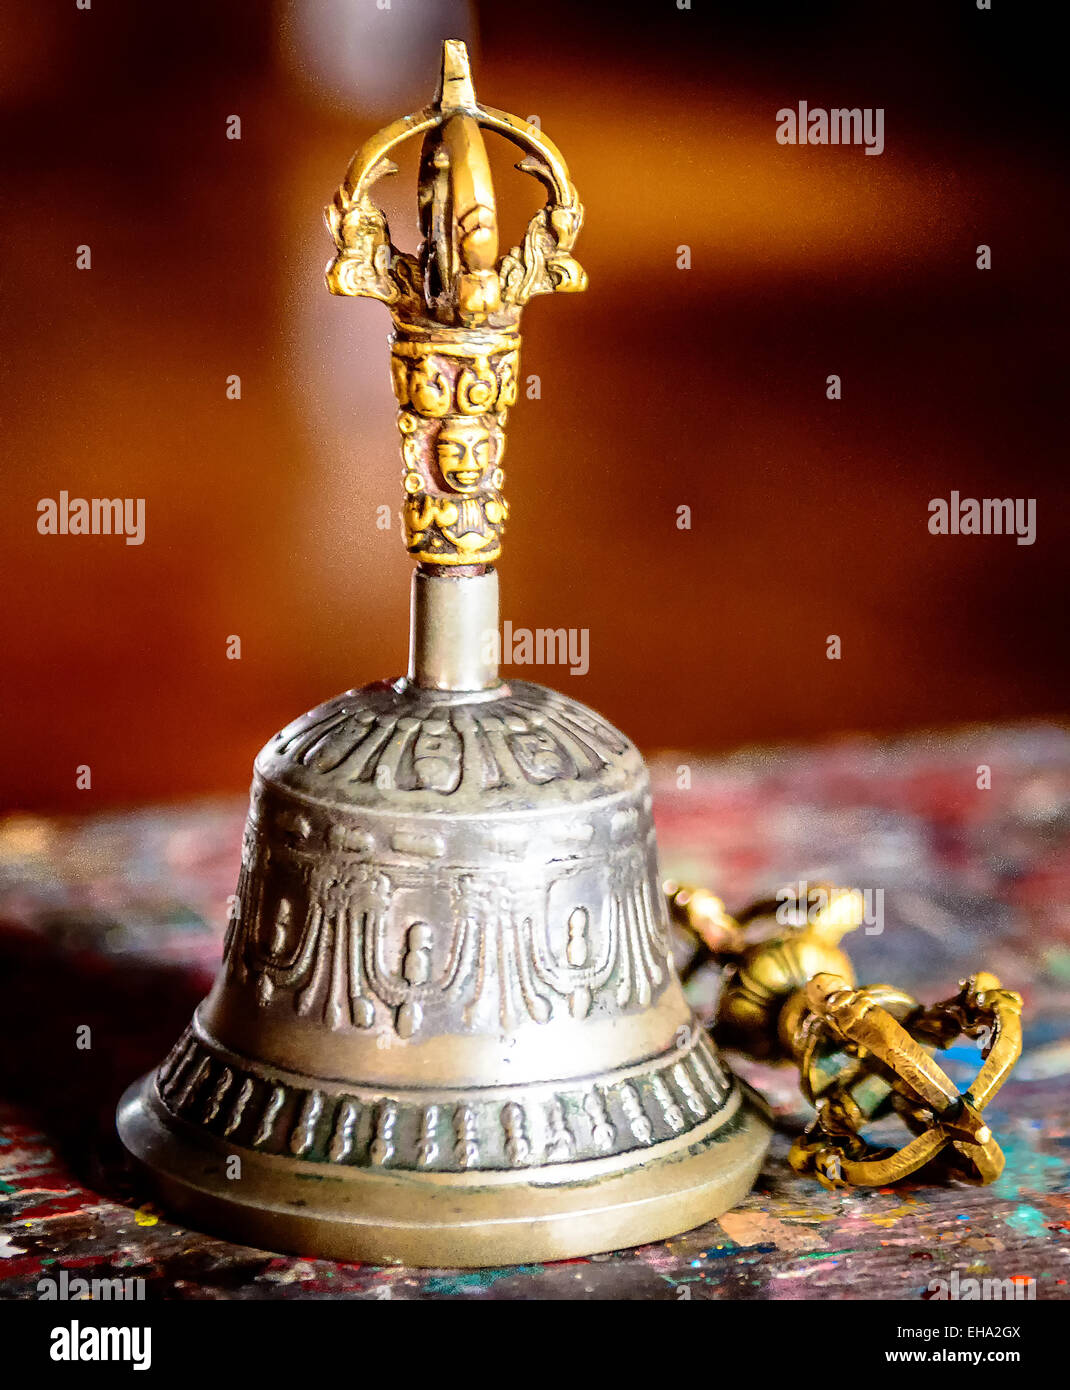 4,106 Tibetan Bells Images, Stock Photos, 3D objects, & Vectors